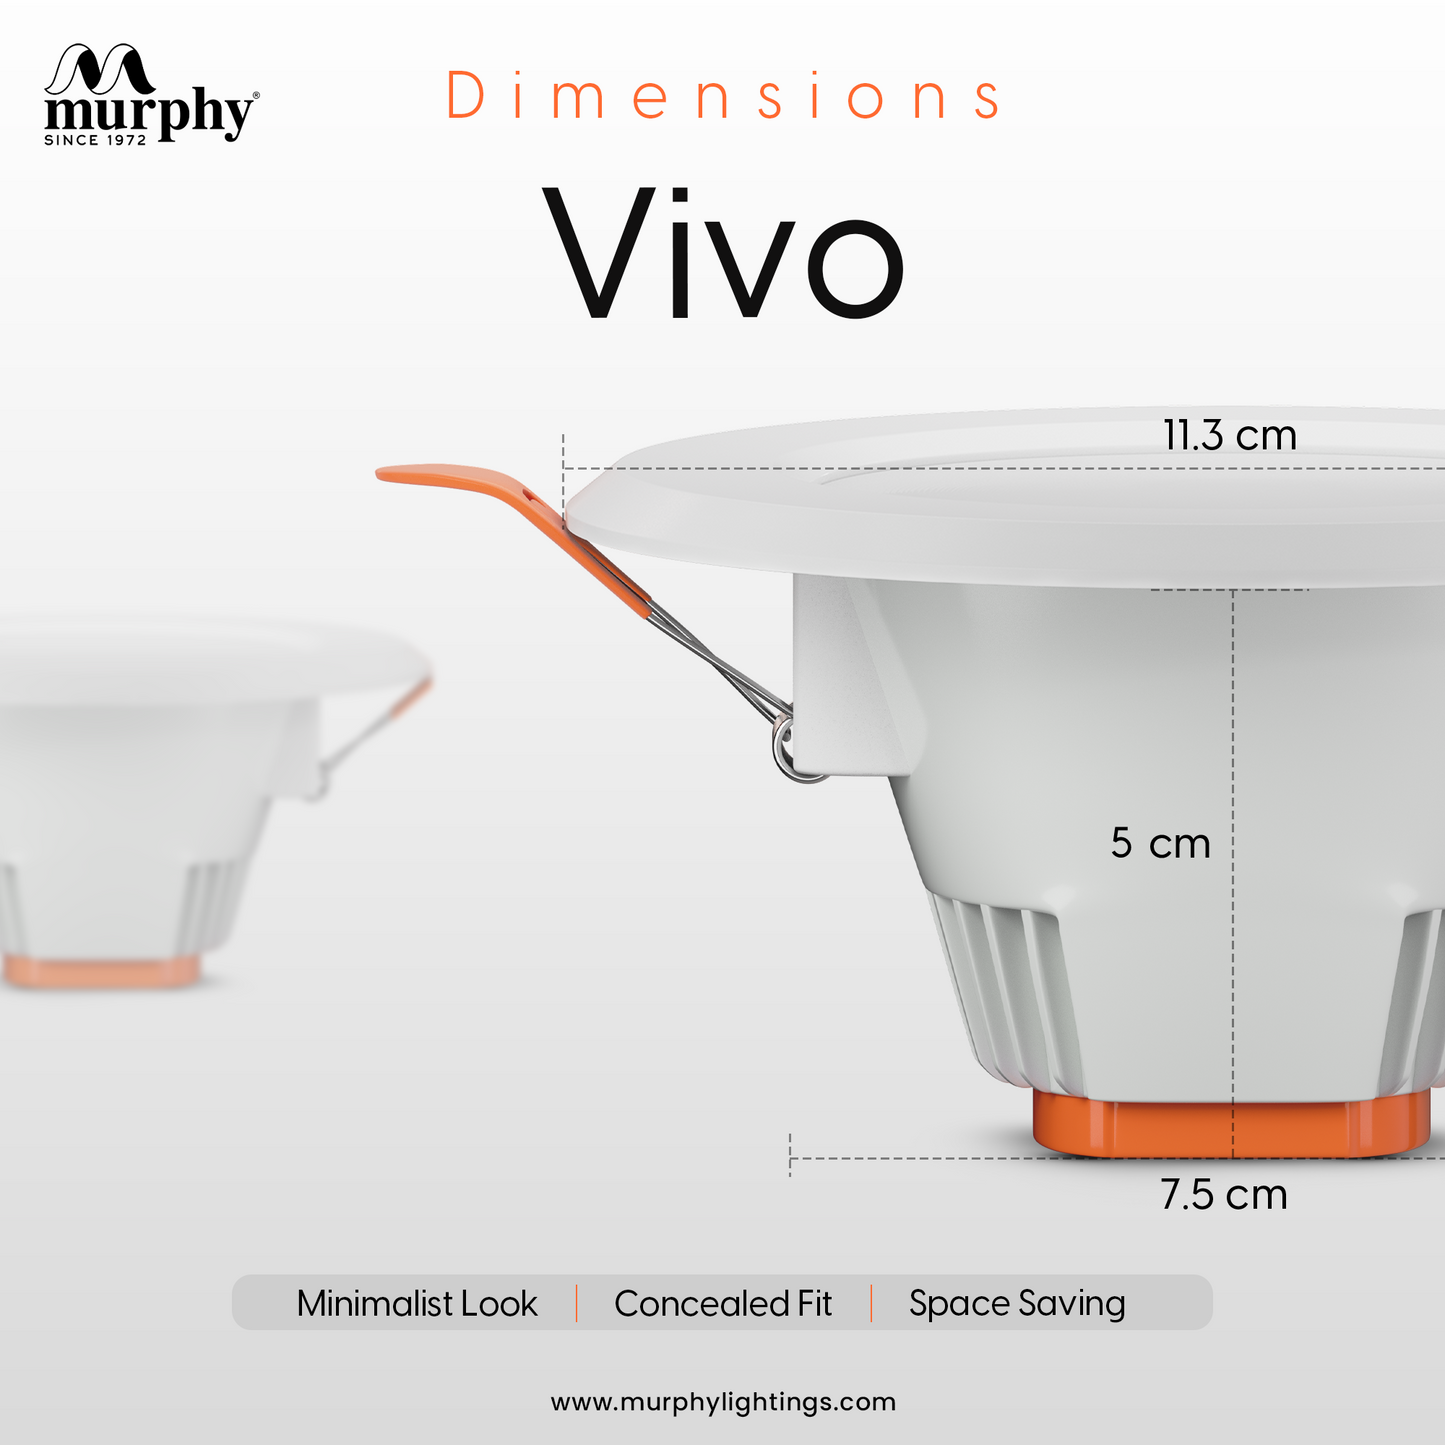 Murphy 7W Vivo LED Concealed Box Down Light